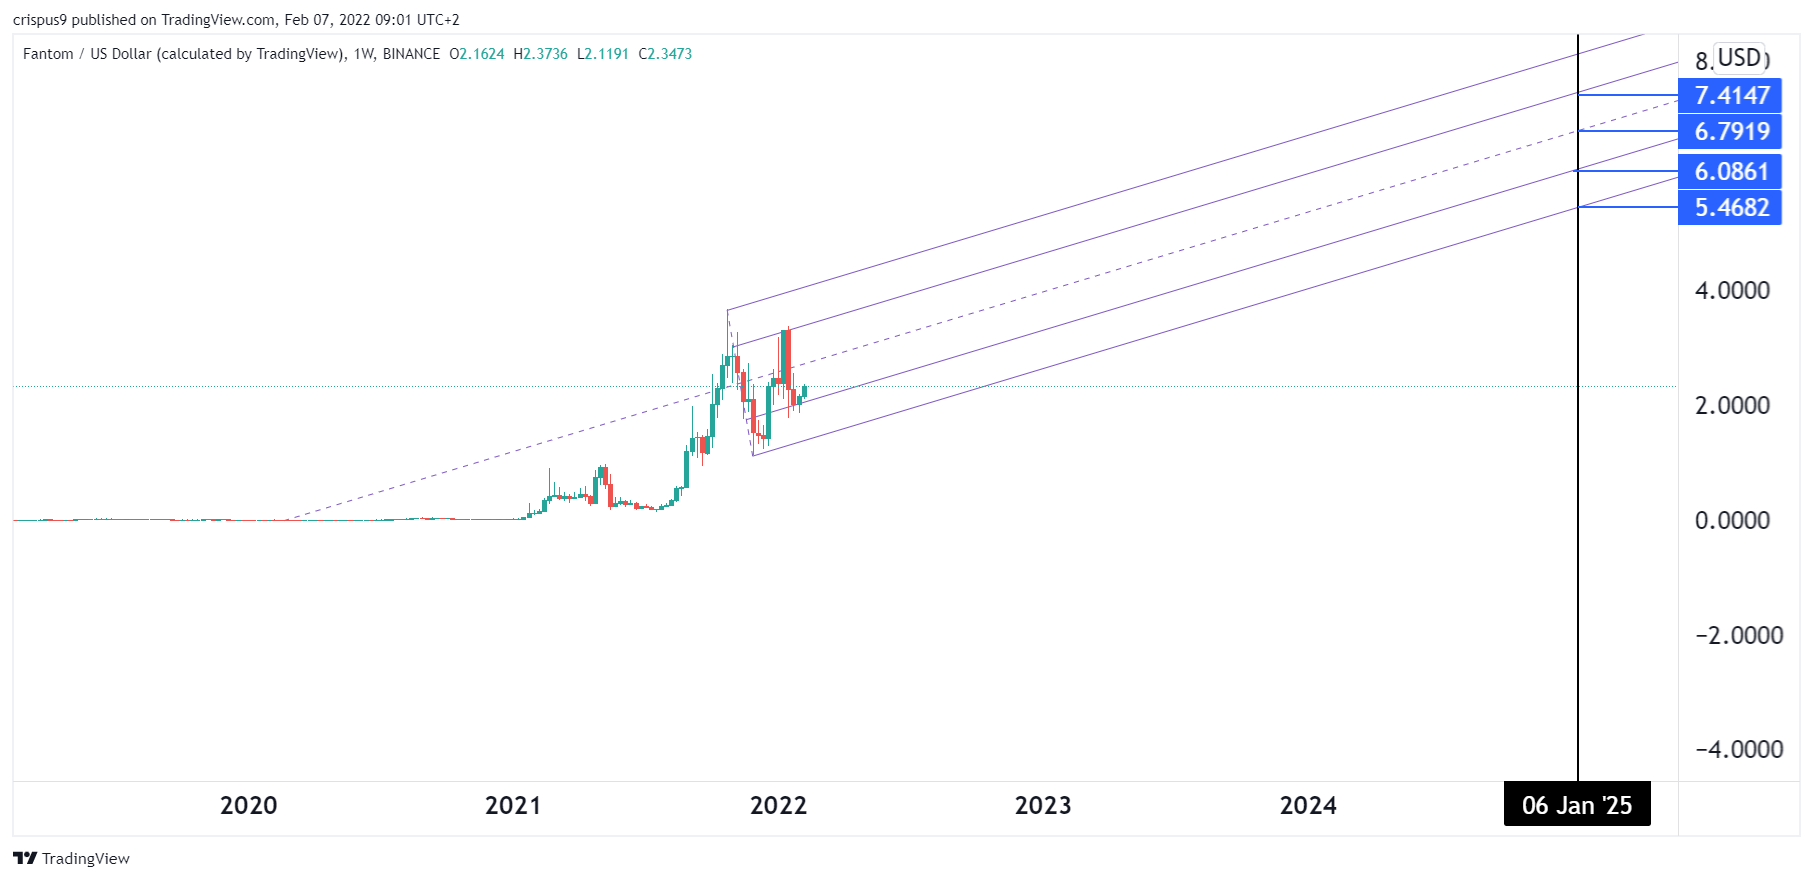 fantom crypto price prediction 2025